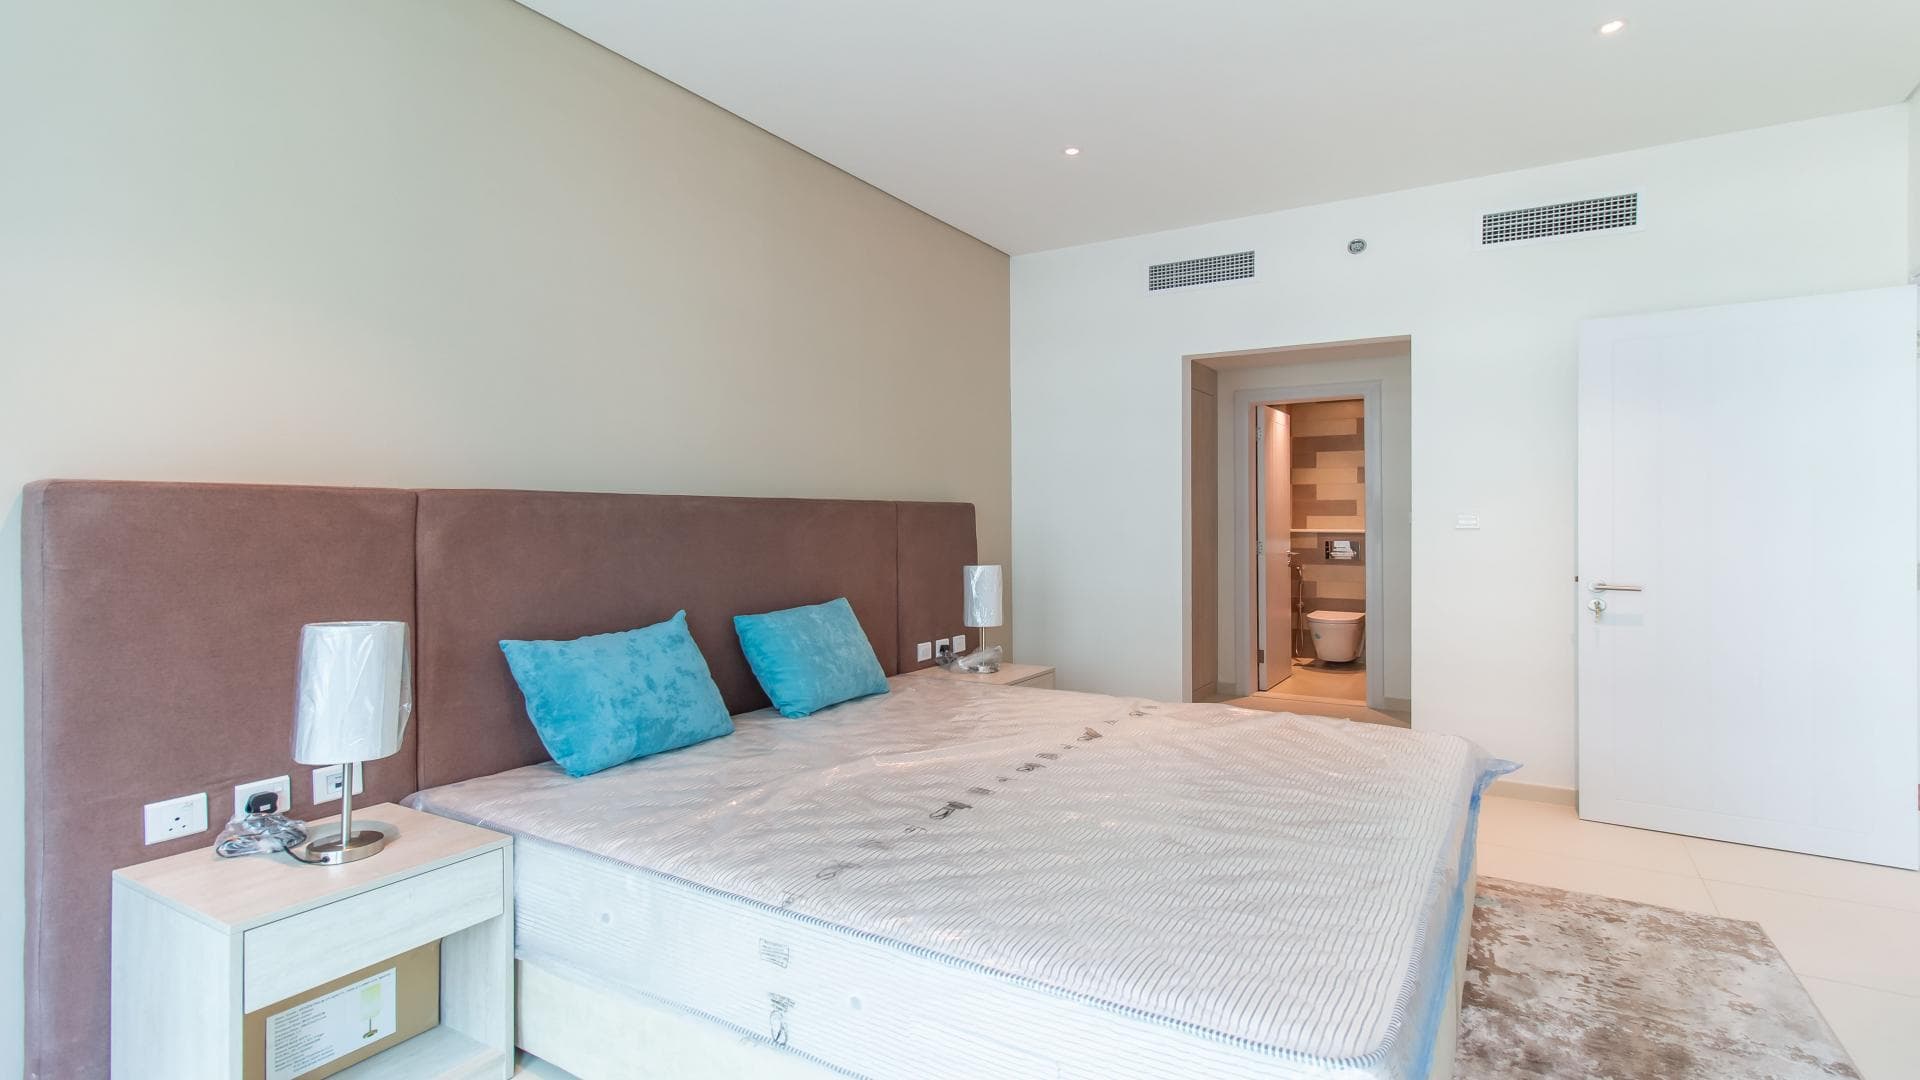 1 Bedroom Apartment For Rent Seven Palm Lp38125 3b65fda5ac84a20.jpg